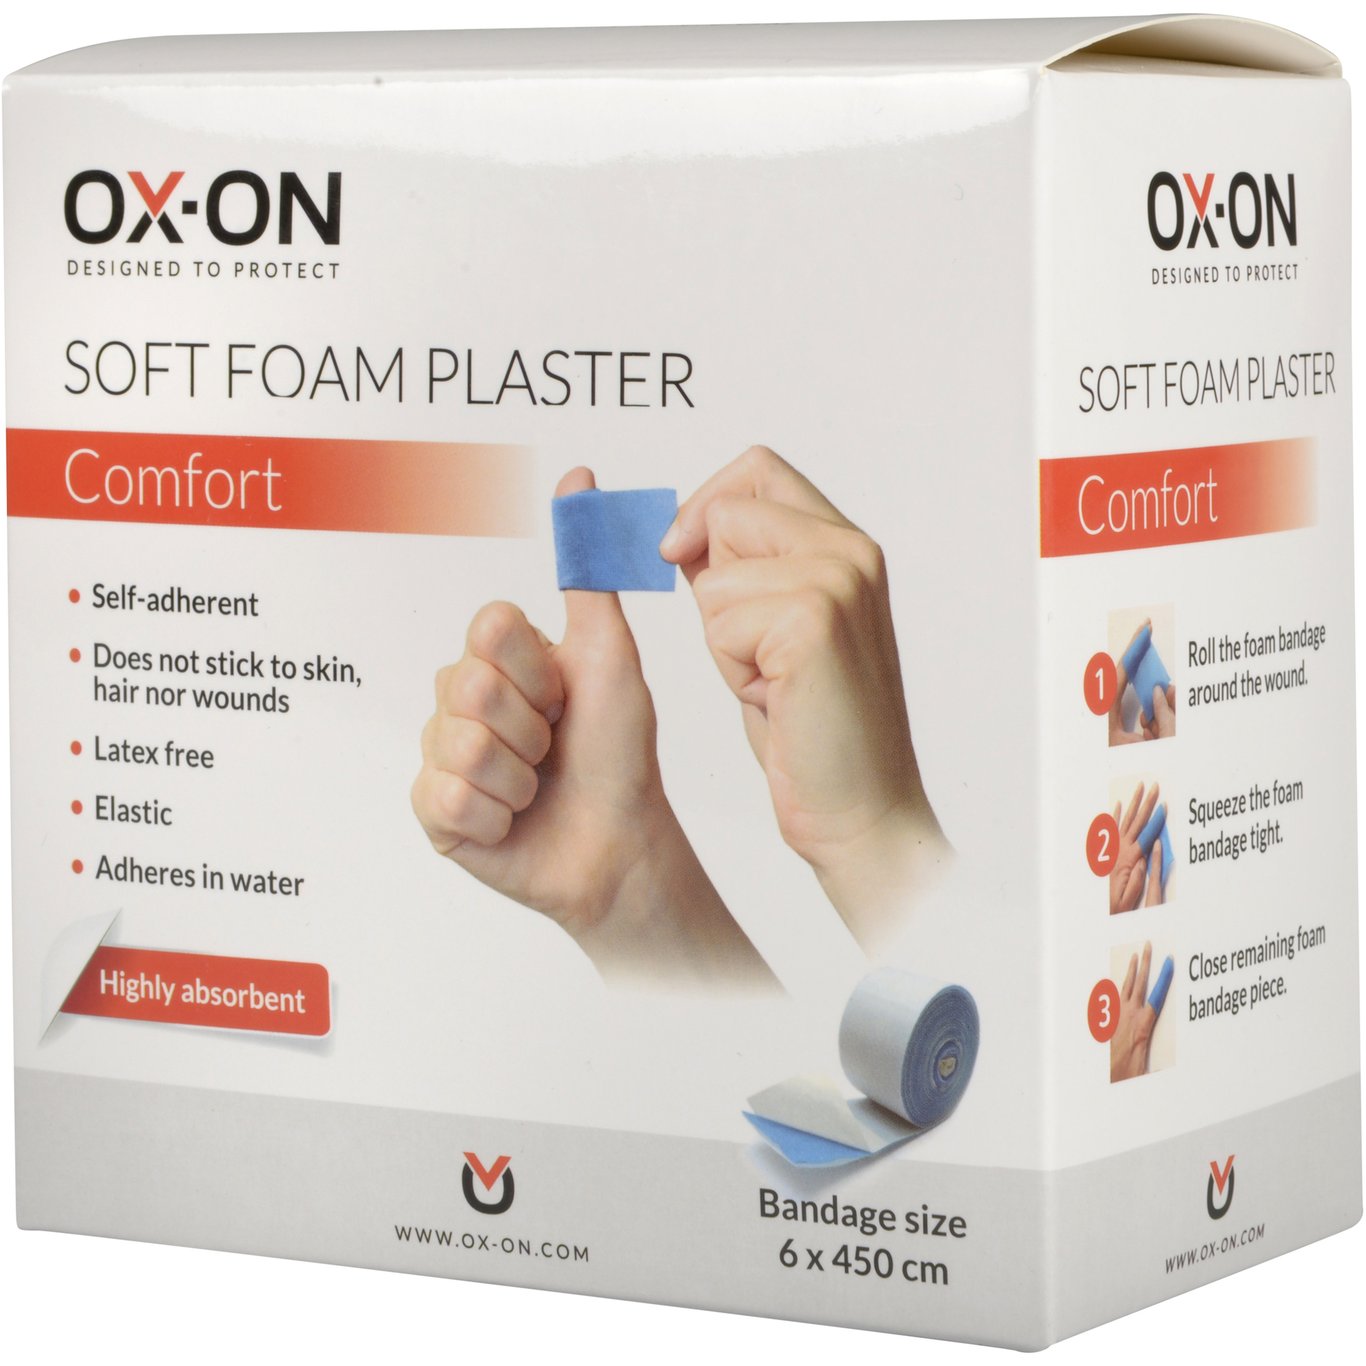 OX-ON SOFT FOAM PLASTER COMFORT